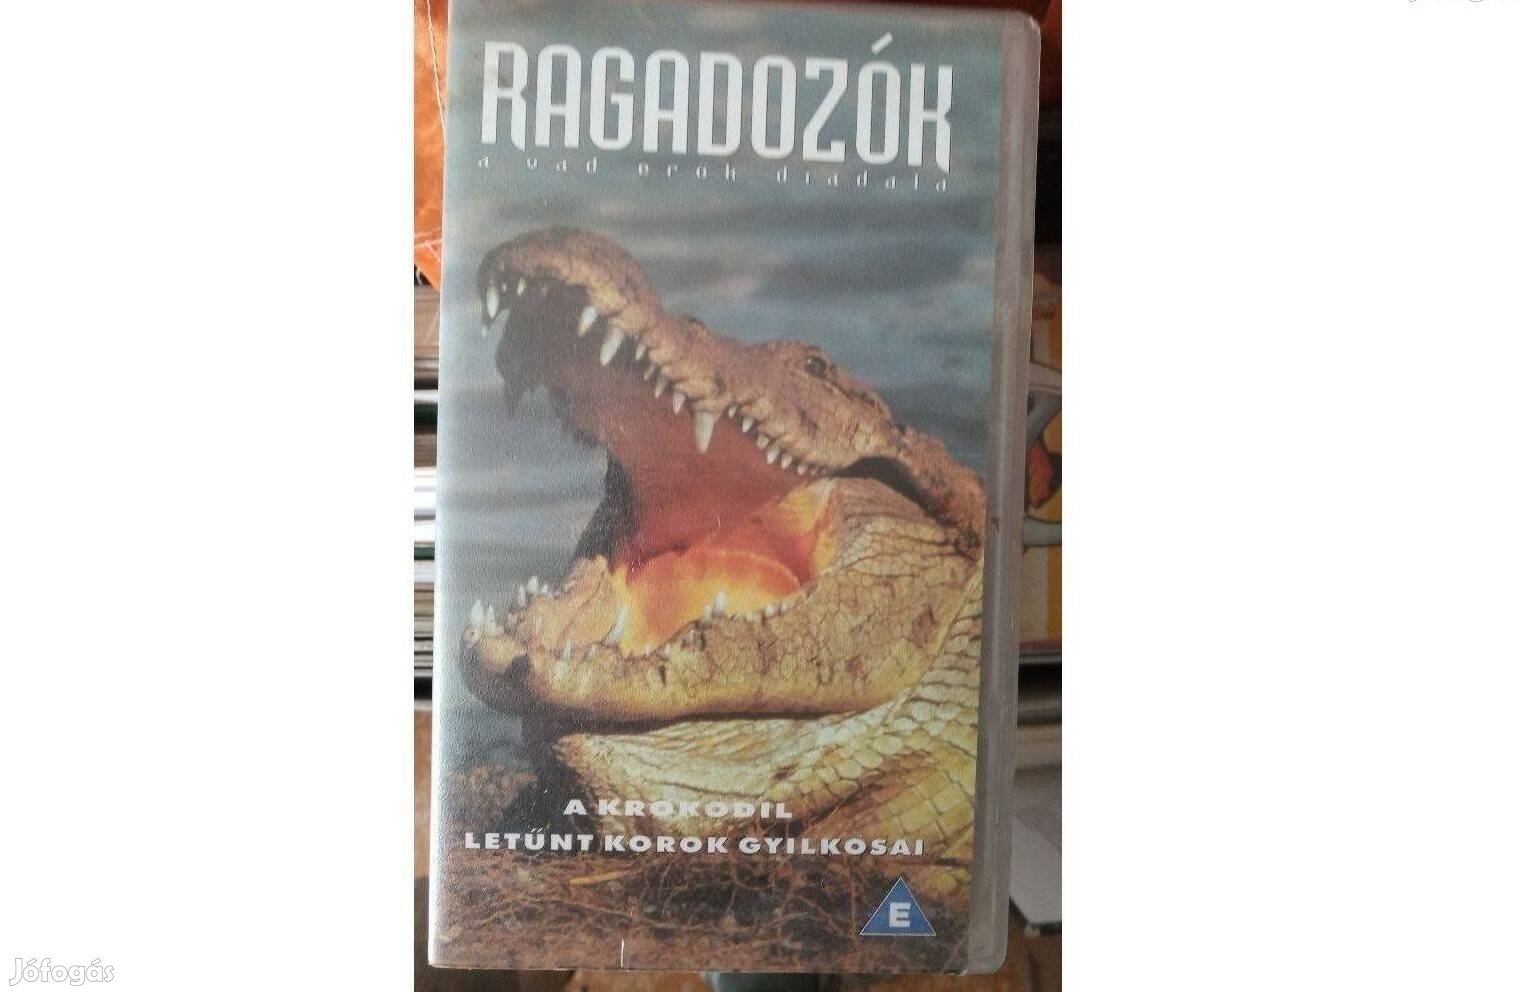 Ragadozók VHS A krokodil, letűnt korok gyilkosai. Debrecenben